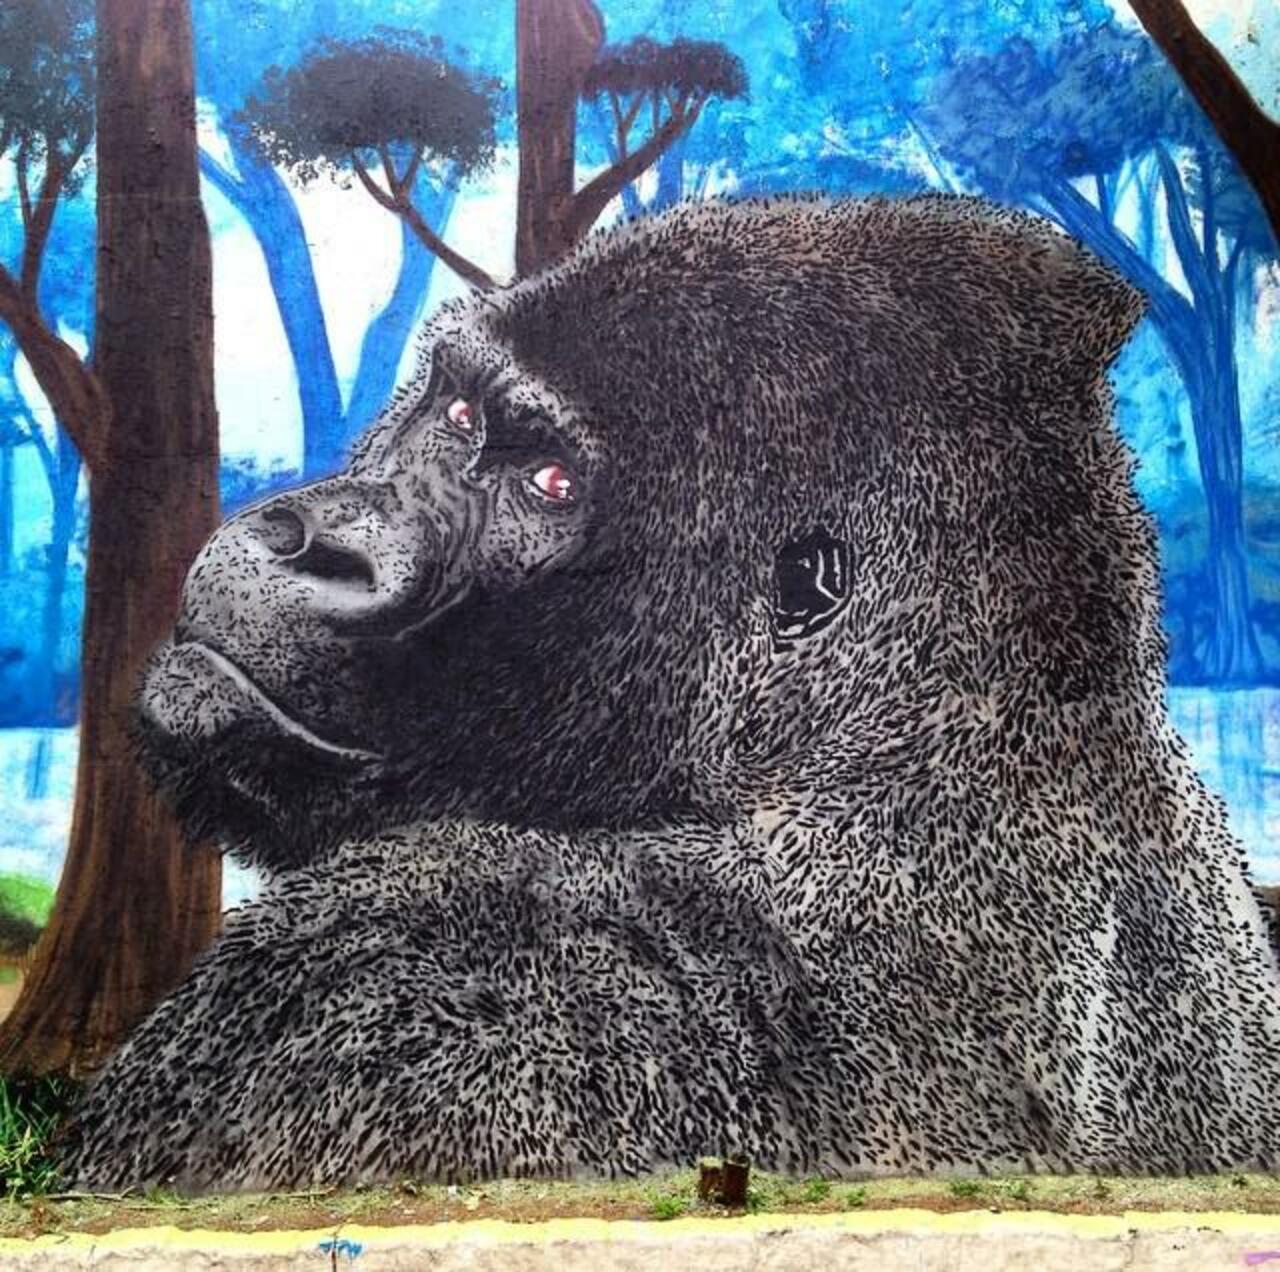 Superb Nature in Street Art piece by Thassio in São Paulo, Brazil  

#art #mural #graffiti #streetart http://t.co/4g23vyeAVP